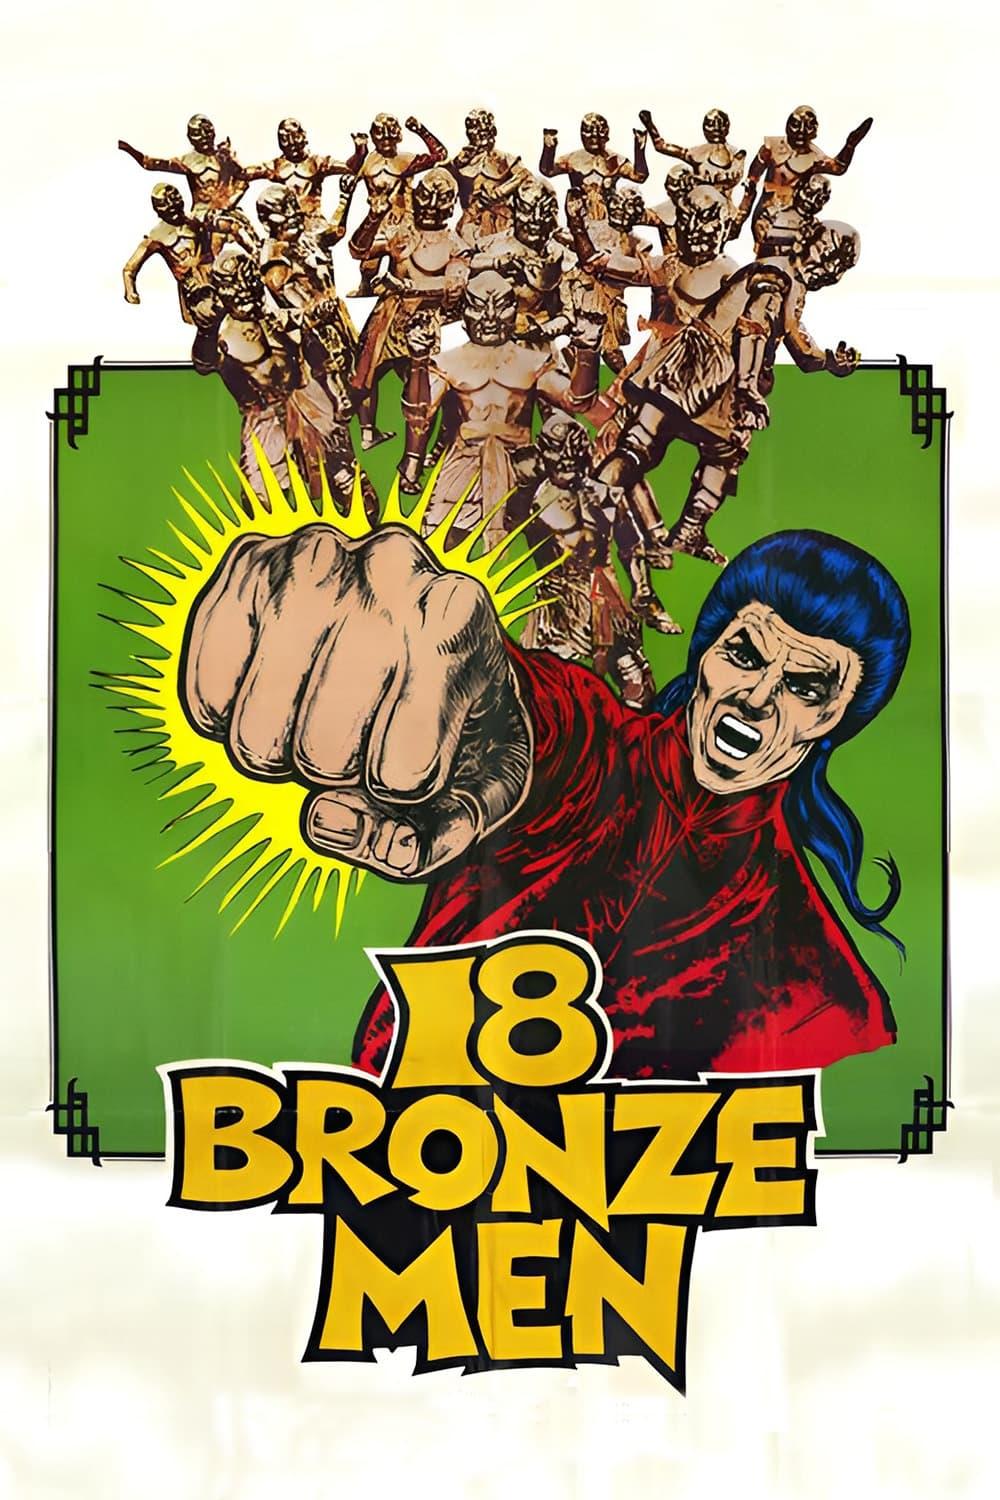 The 18 Bronzemen poster